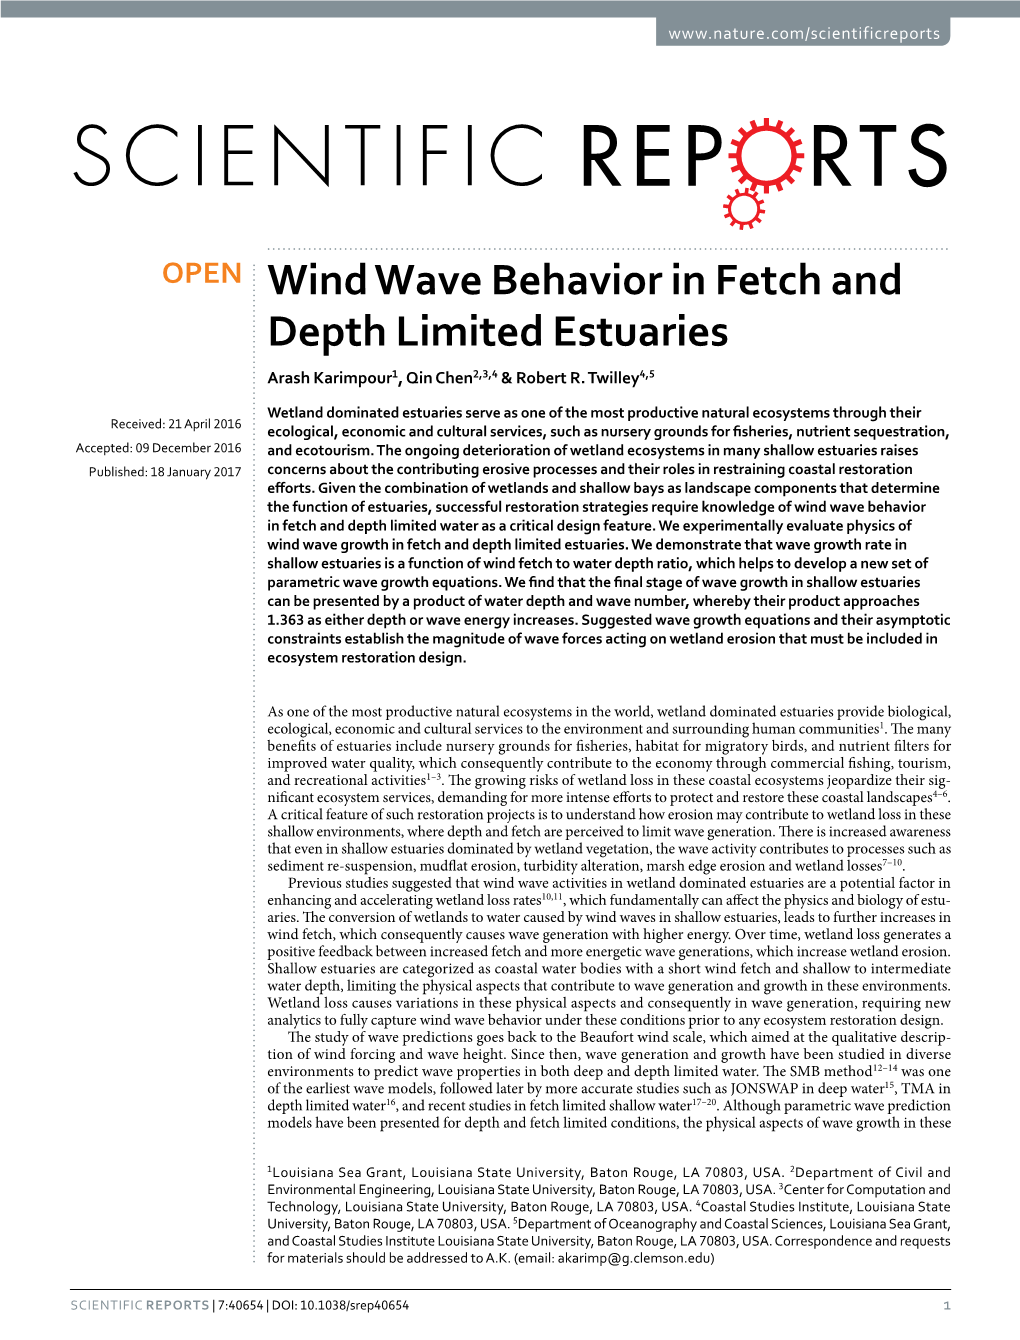 Wind Wave Behavior in Fetch and Depth Limited Estuaries Arash Karimpour1, Qin Chen2,3,4 & Robert R